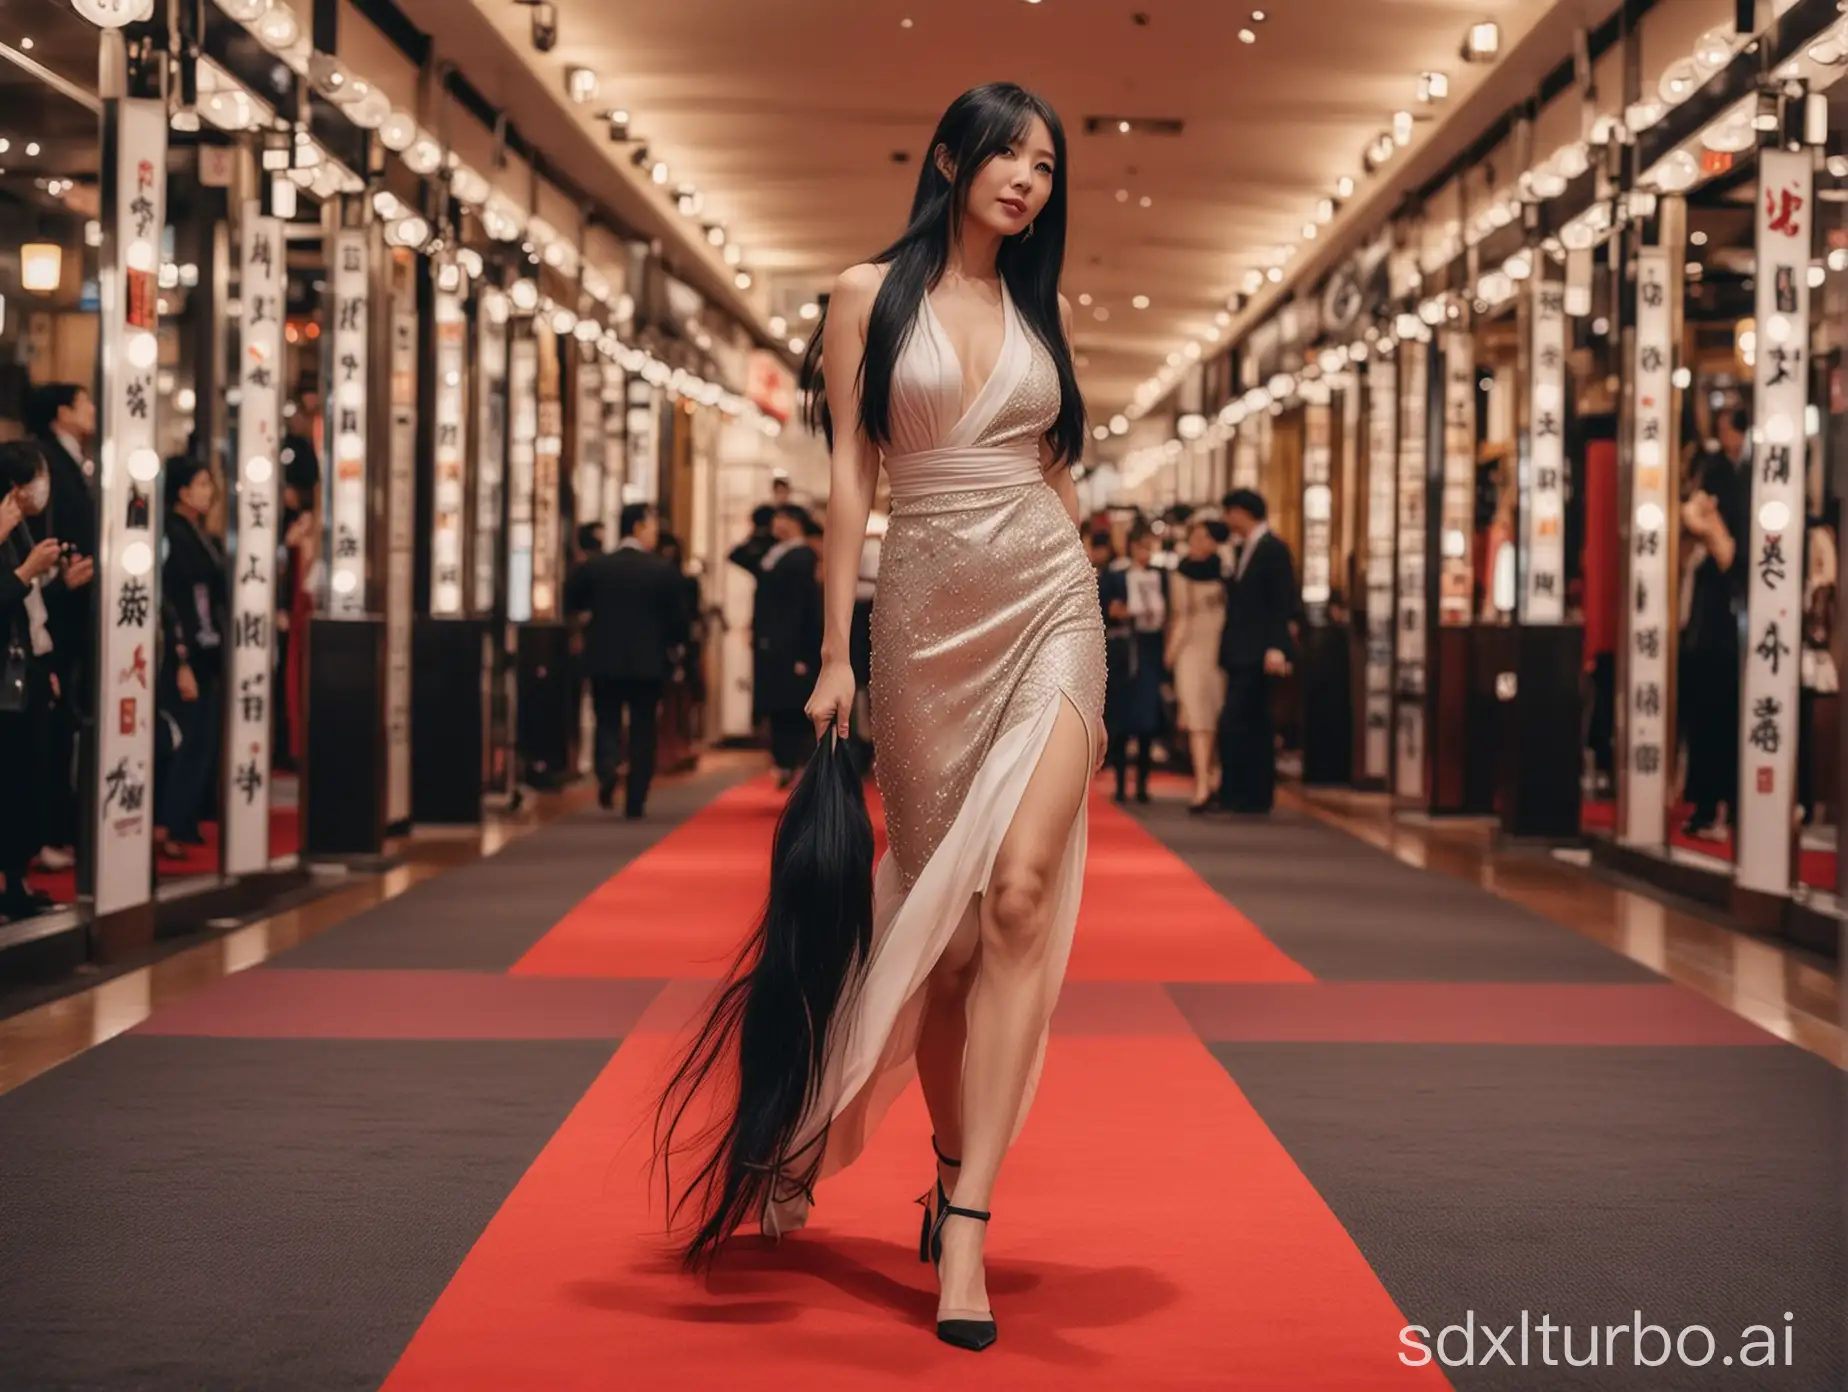 Stylish-Japanese-Instagram-Model-Walking-Red-Carpet-in-Fashionable-Attire